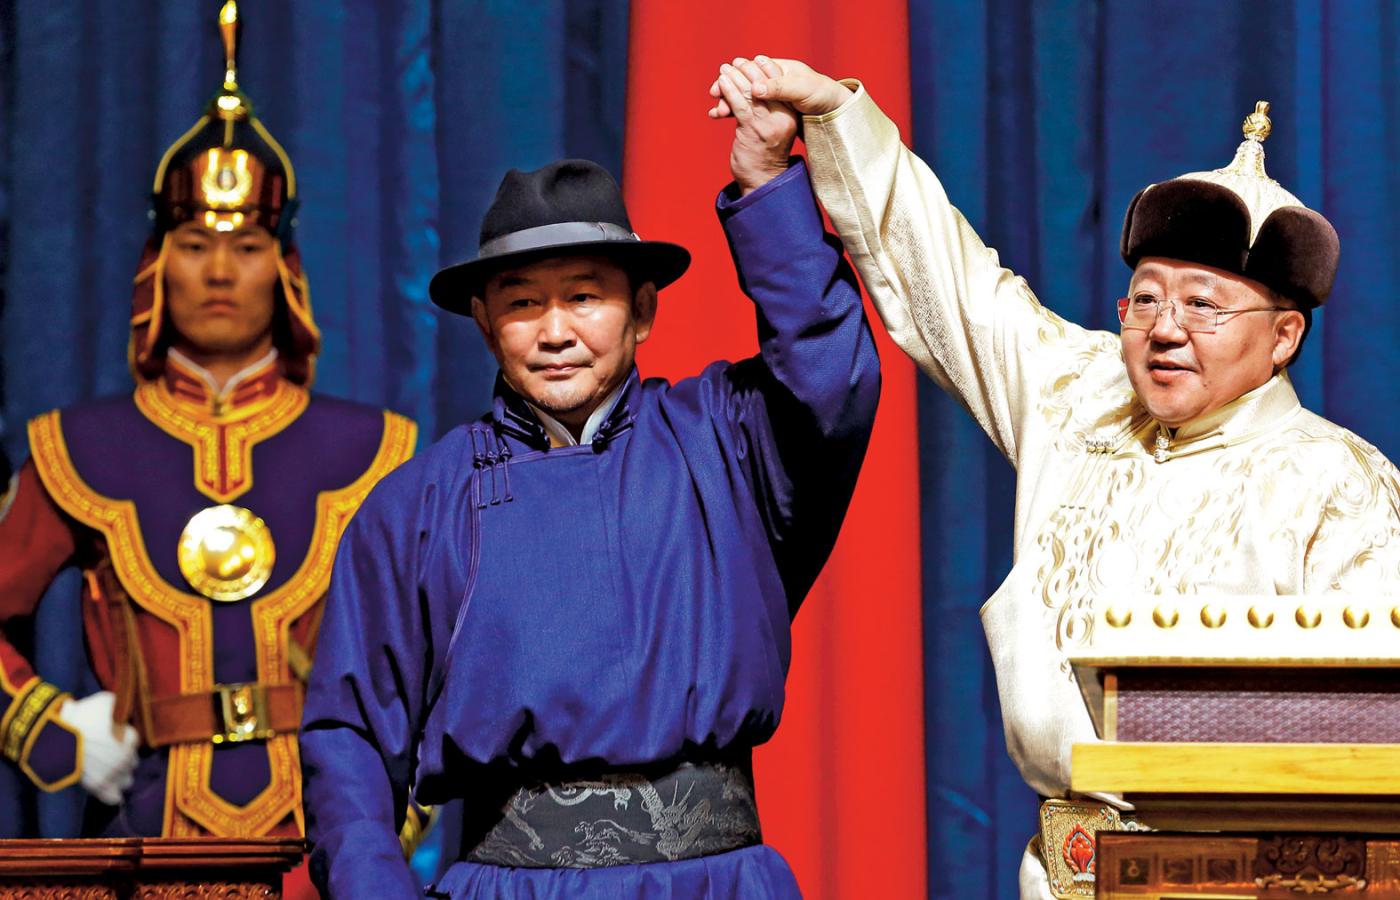 Od prawej: były prezydent Mongolii Cachiagijn Elbegdordż i jego następca Khaltmaa Battulga